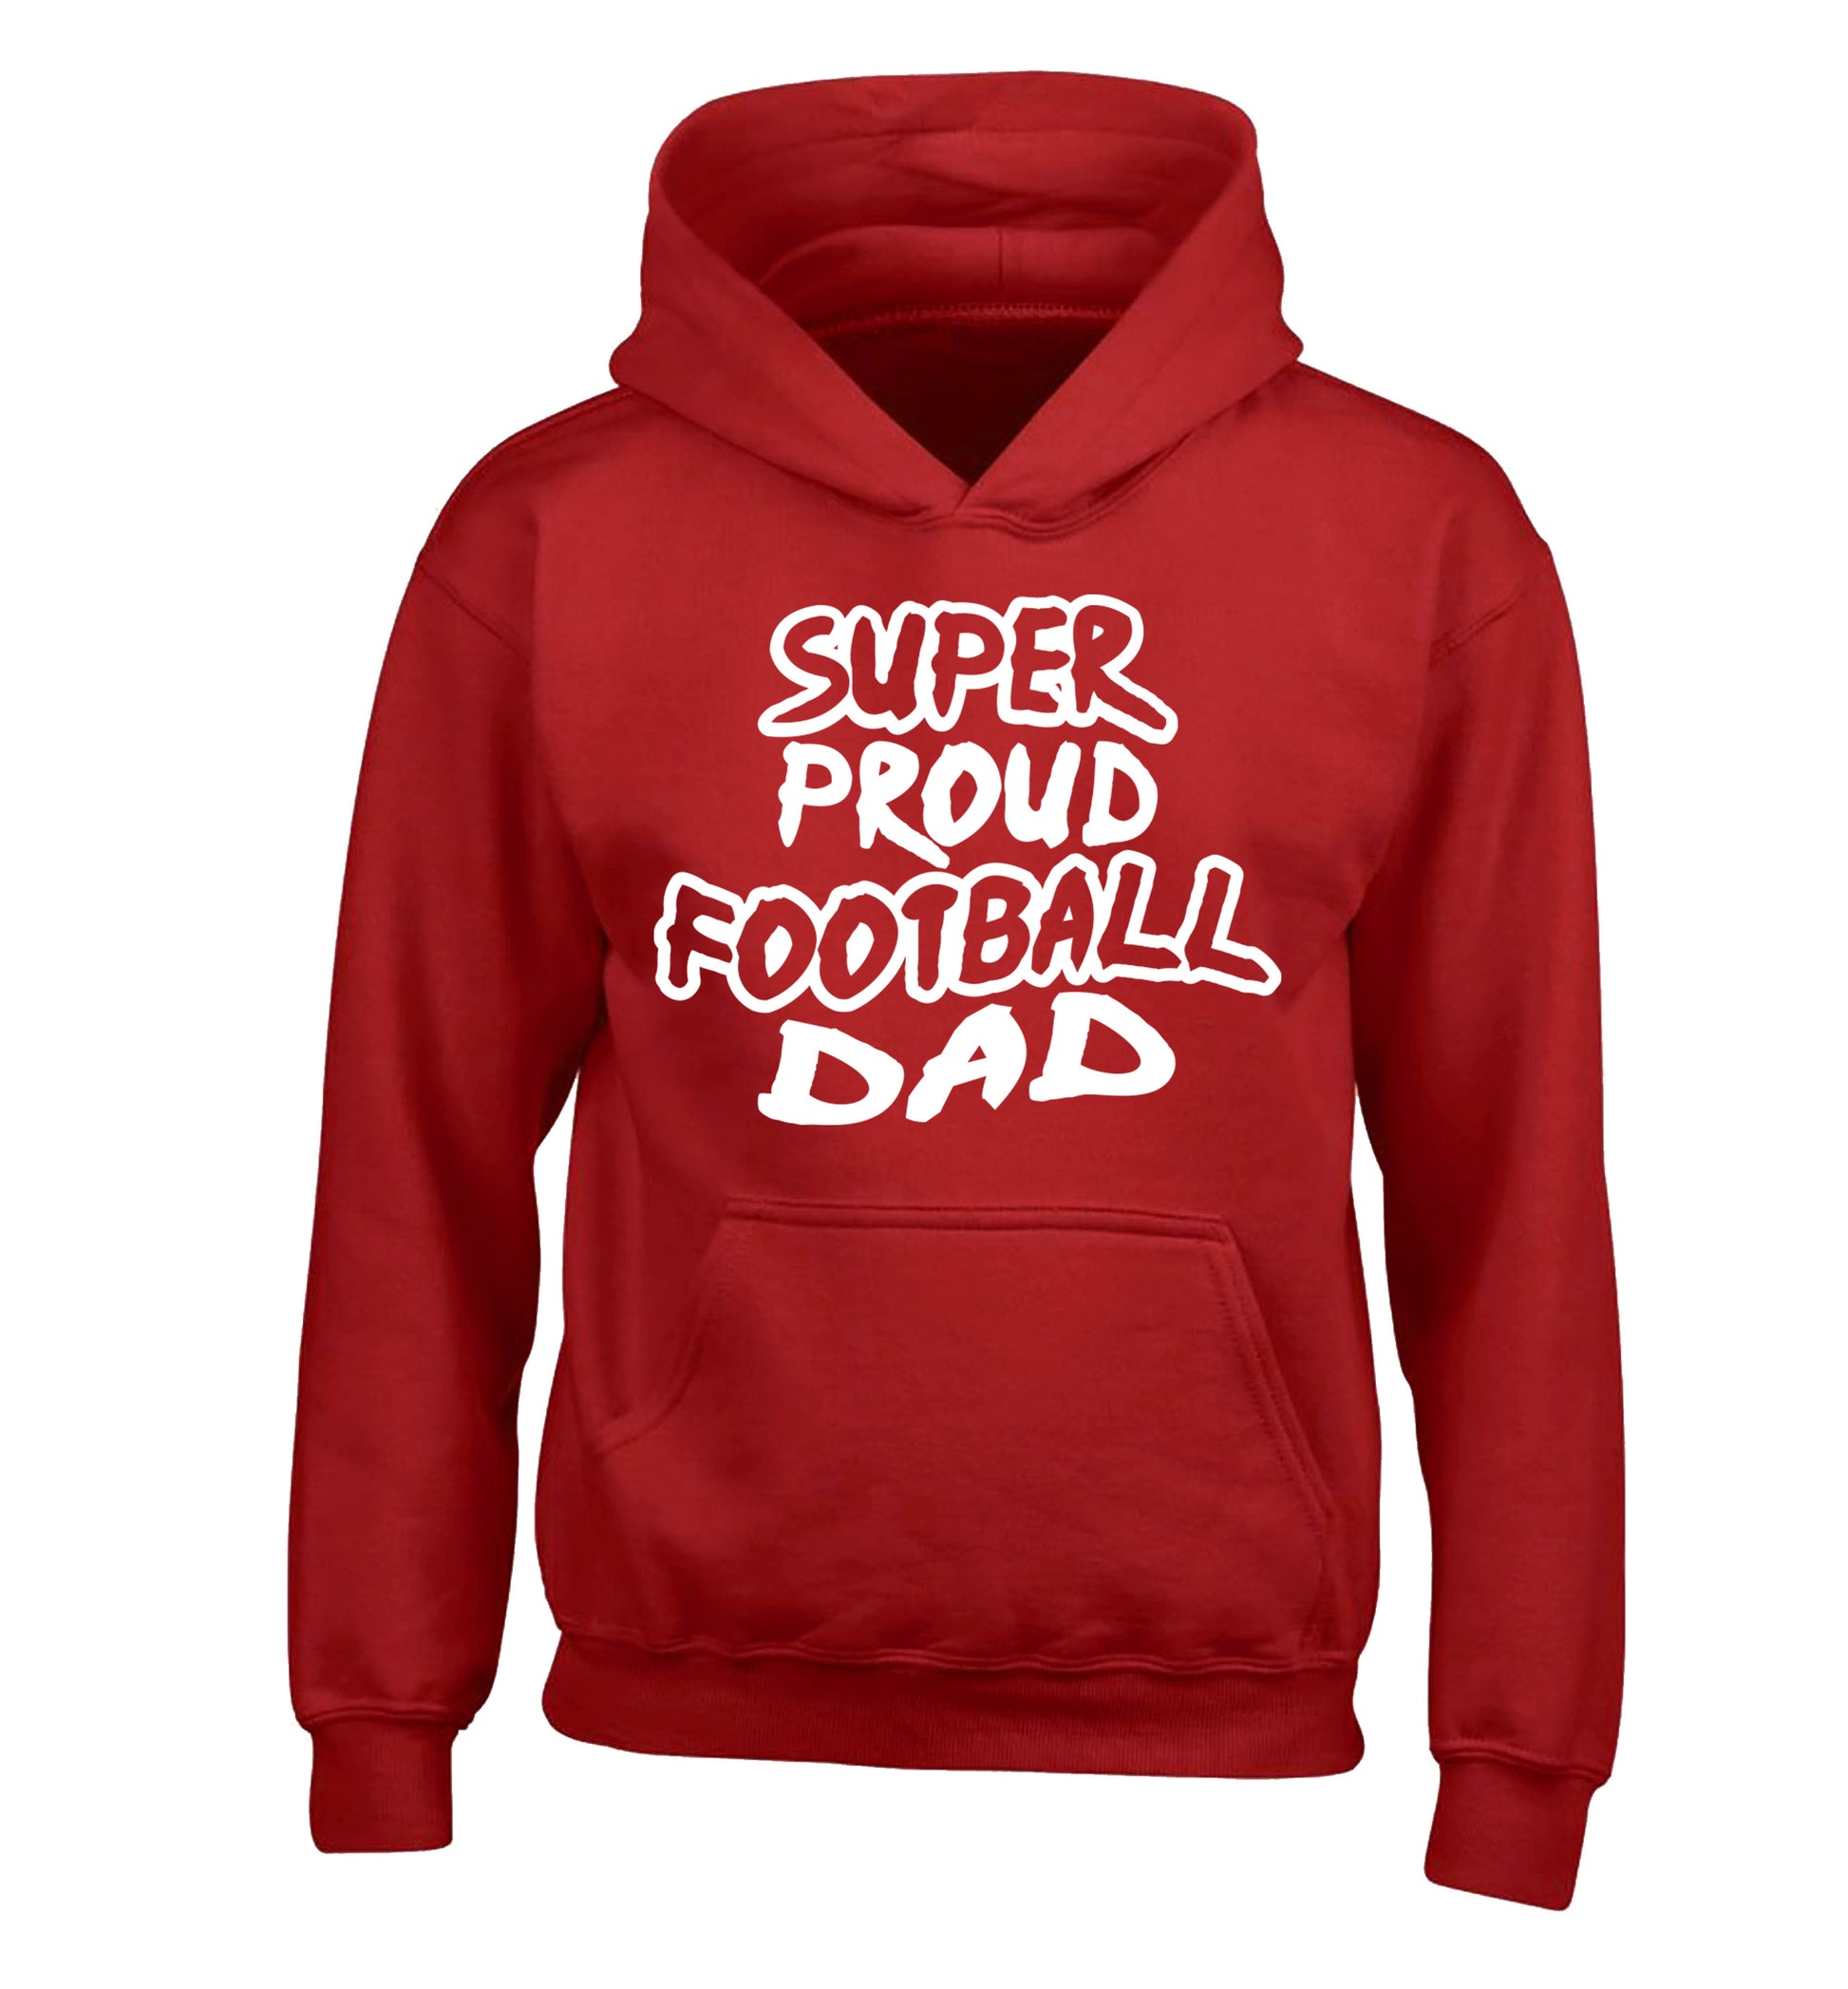 Super proud football dad children's red hoodie 12-14 Years